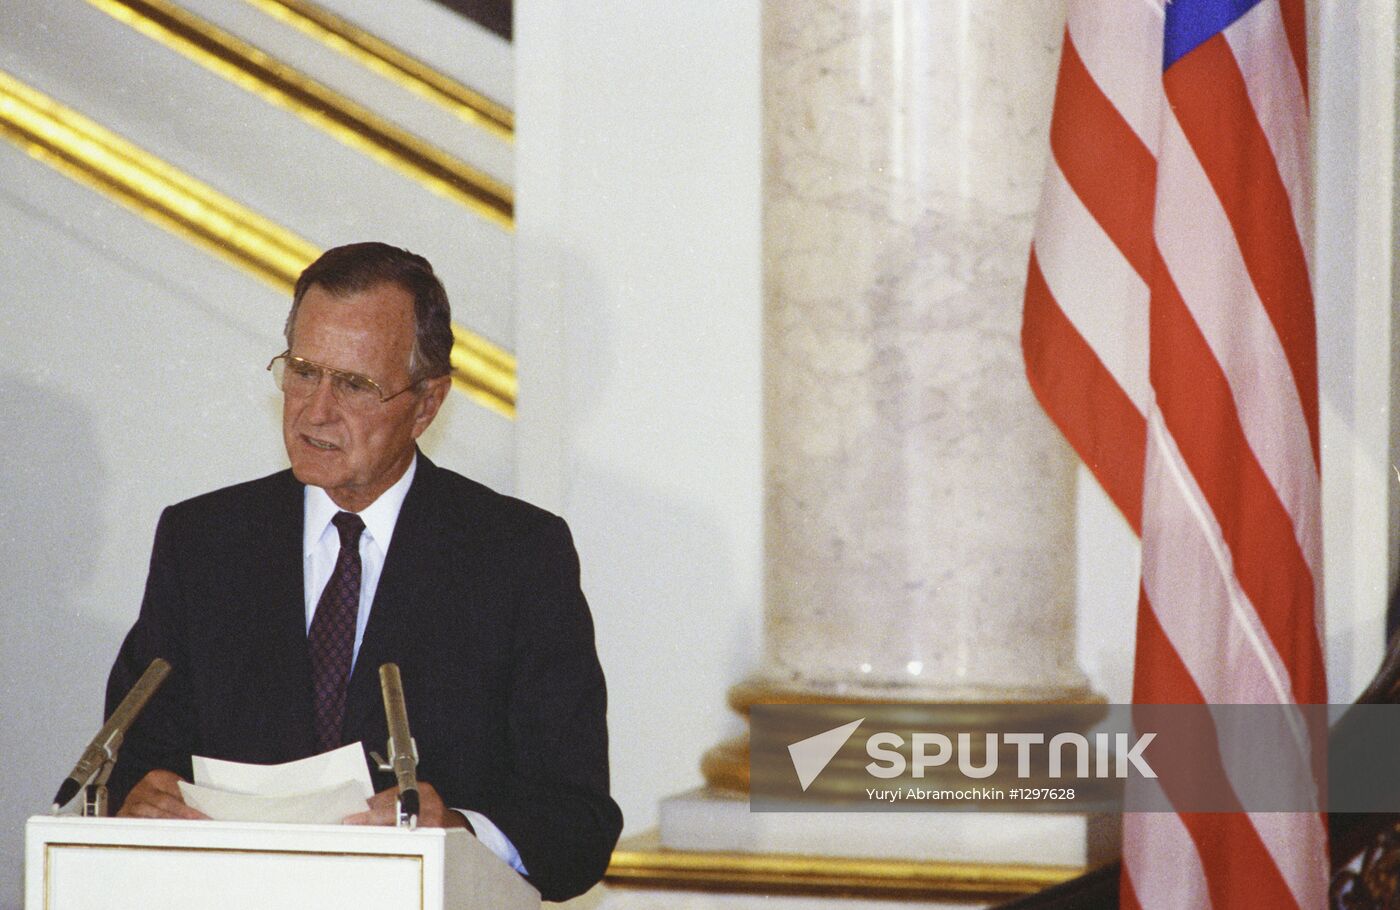 Mikhail Gorbachev and George Bush